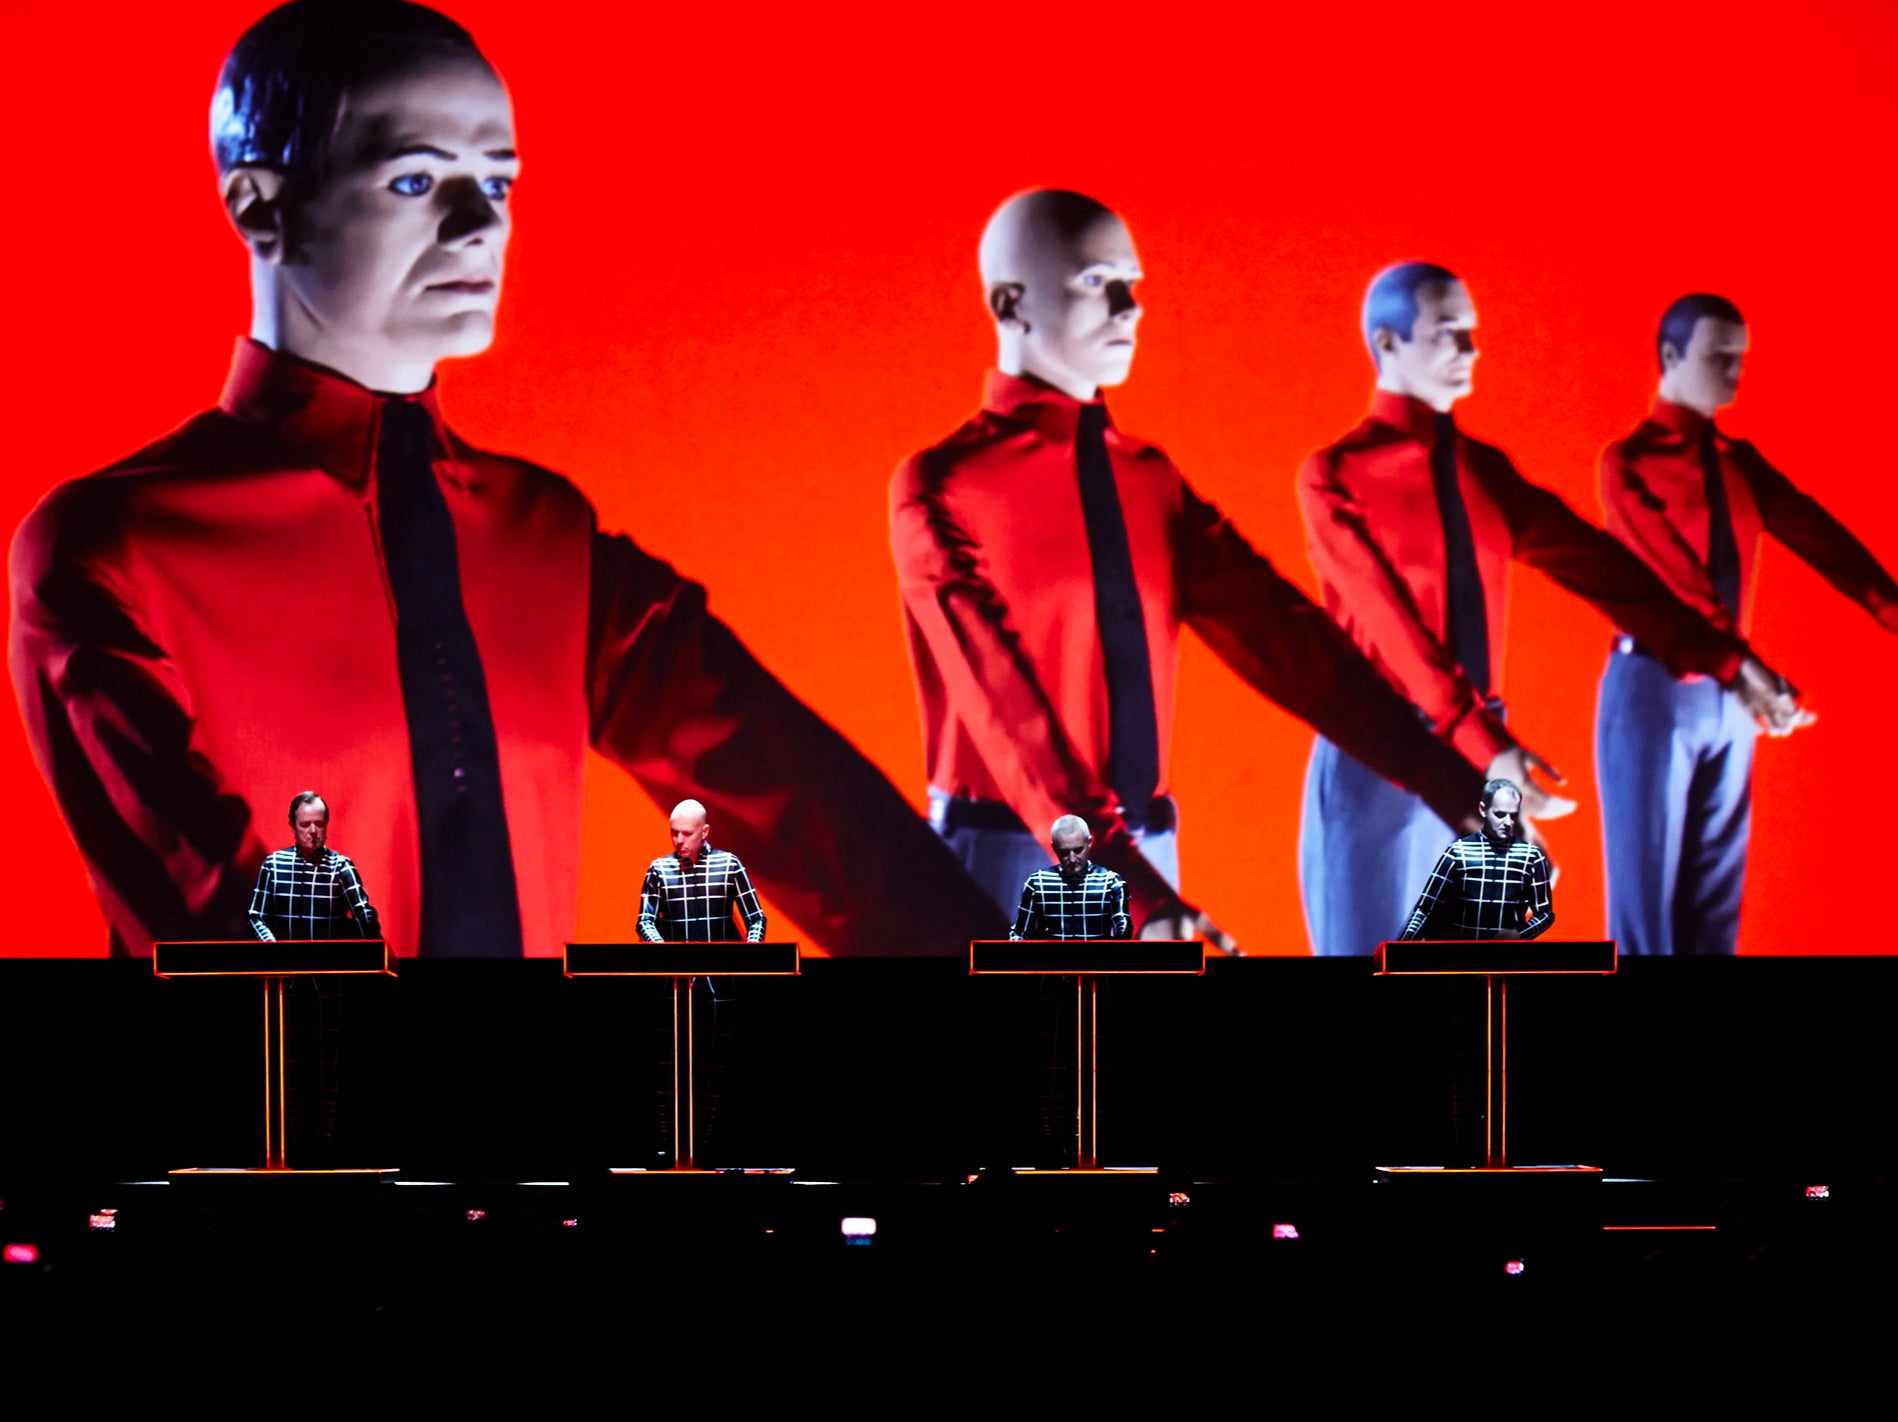 Kraftwerk’s ‘Robot Pop’ inspired everyone from David Bowie to Daft Punk